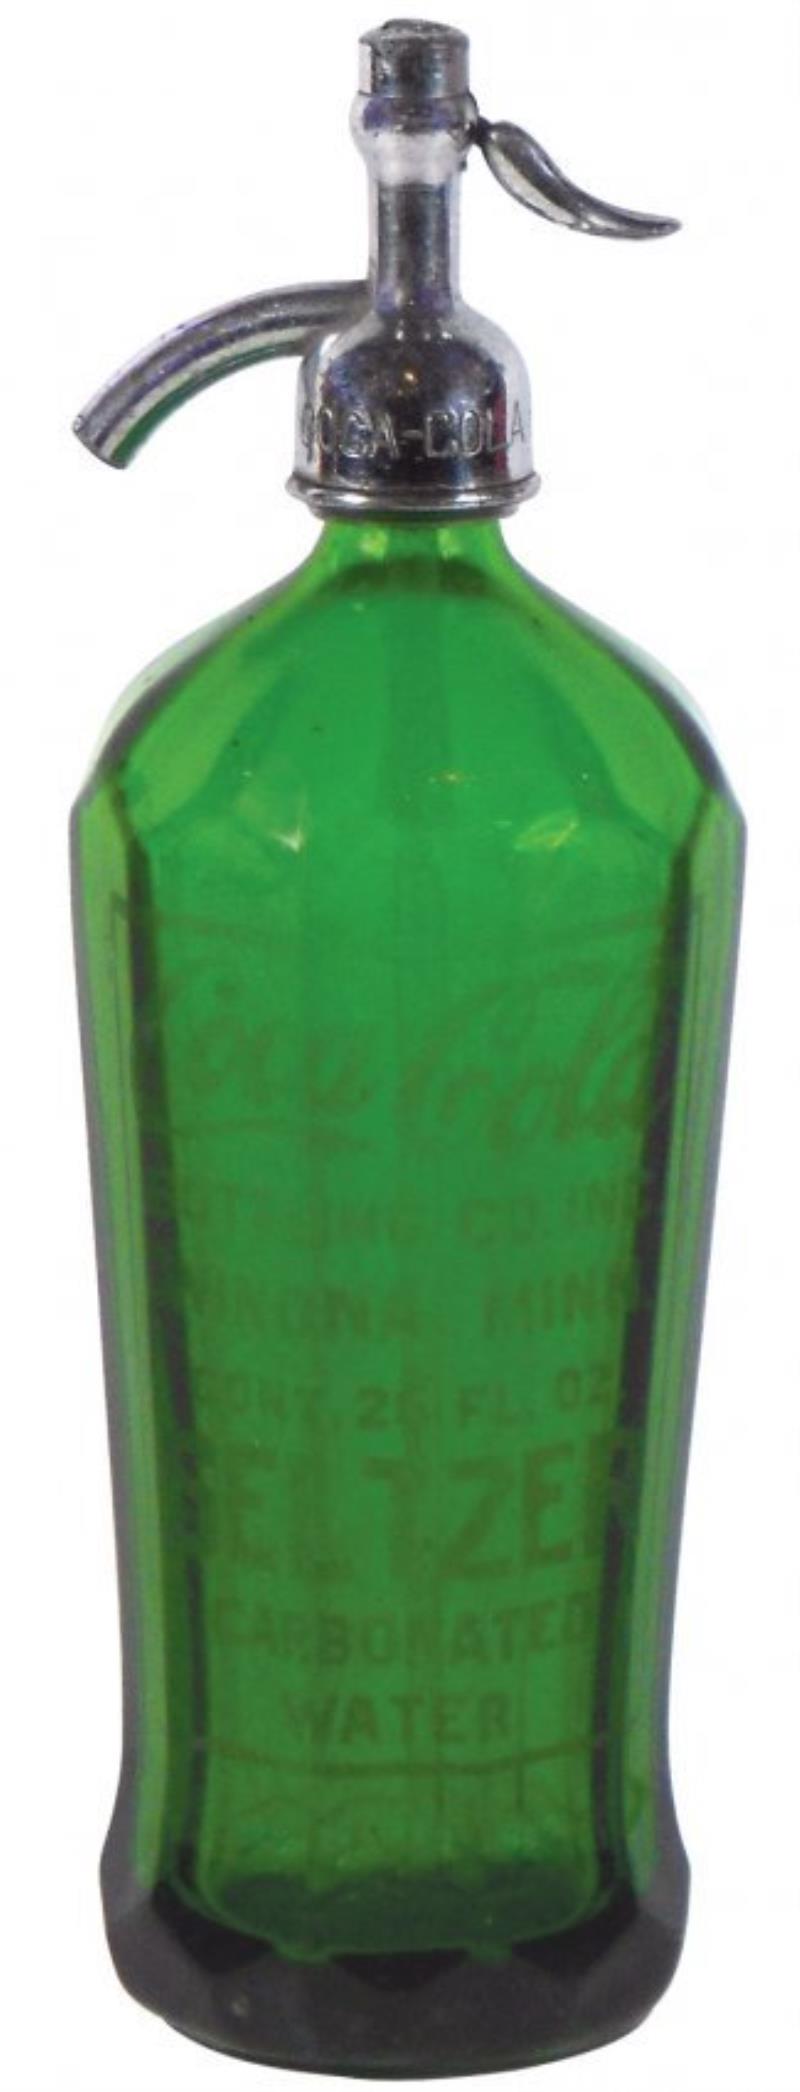 Soda fountain, Coca-Cola seltzer bottle, emerald green